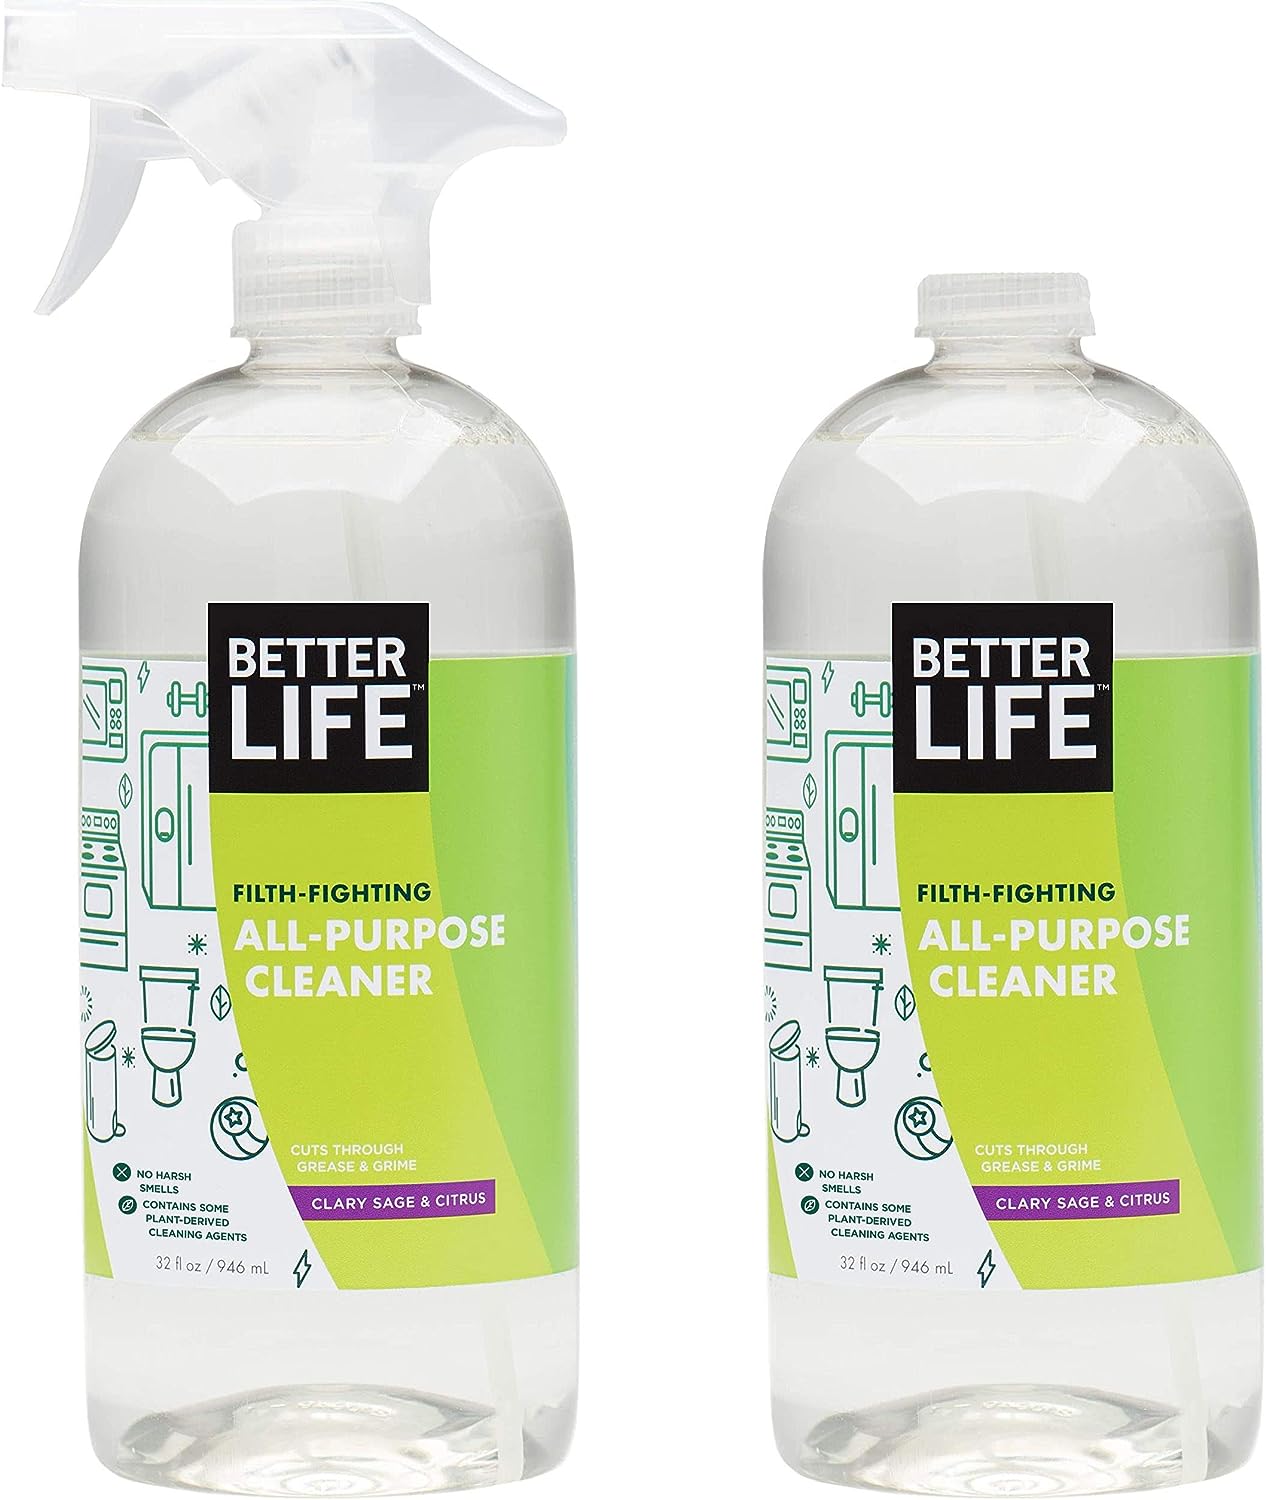 Lifeproof Home Ceramic Coating Spray Kit - Advanced Ceramic